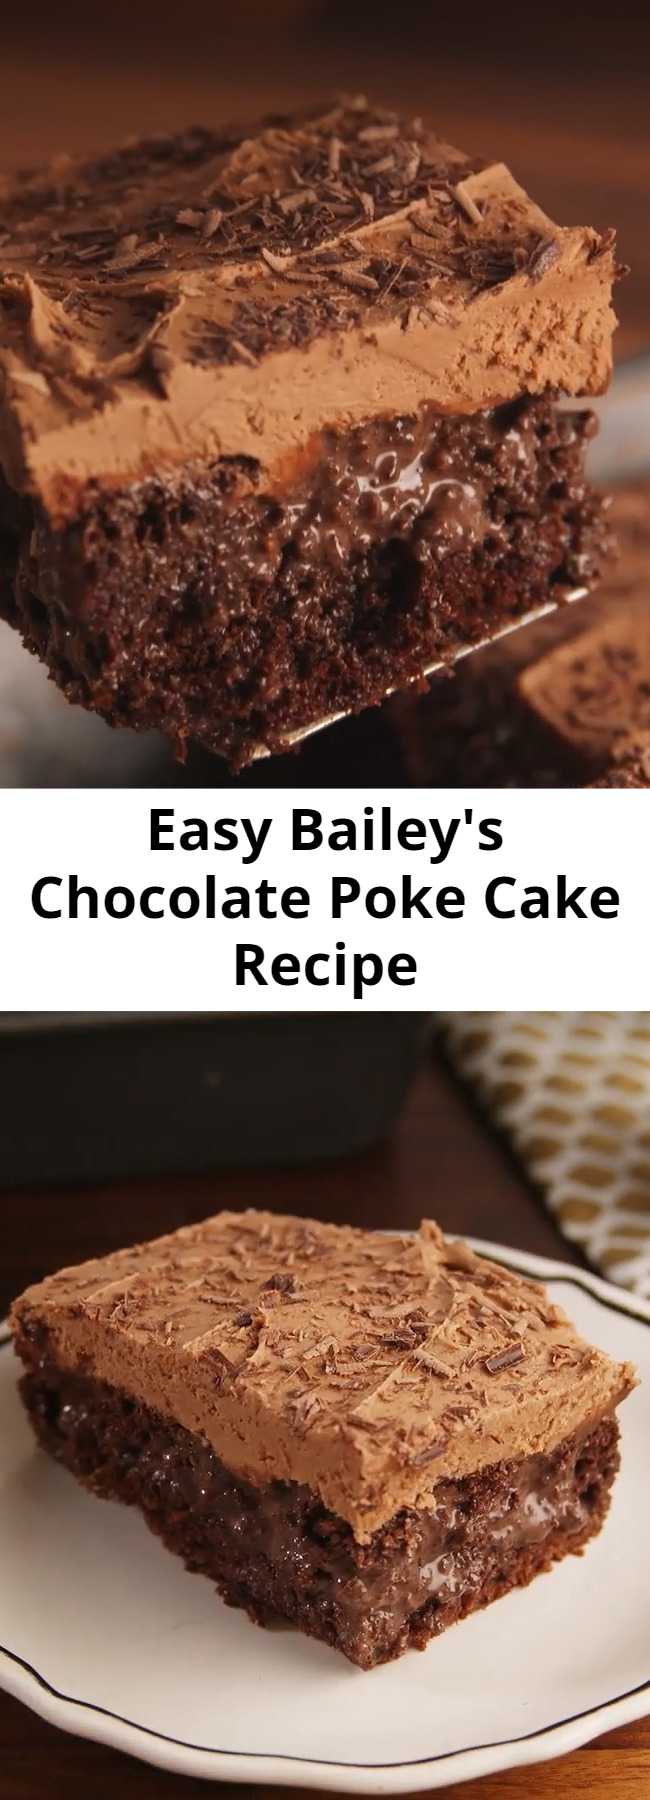 Easy Bailey's Chocolate Poke Cake Recipe - Chocolate on chocolate. Step up your boxed chocolate cake mix with Baileys! If you love Baileys you'll love this Baileys Poke Cake. #easy #recipe #cake #chocolate #baileys #liqueur #alcohol #pokecake #heavycream #storebought #condensedmilk #irishcream #irish #howtomake